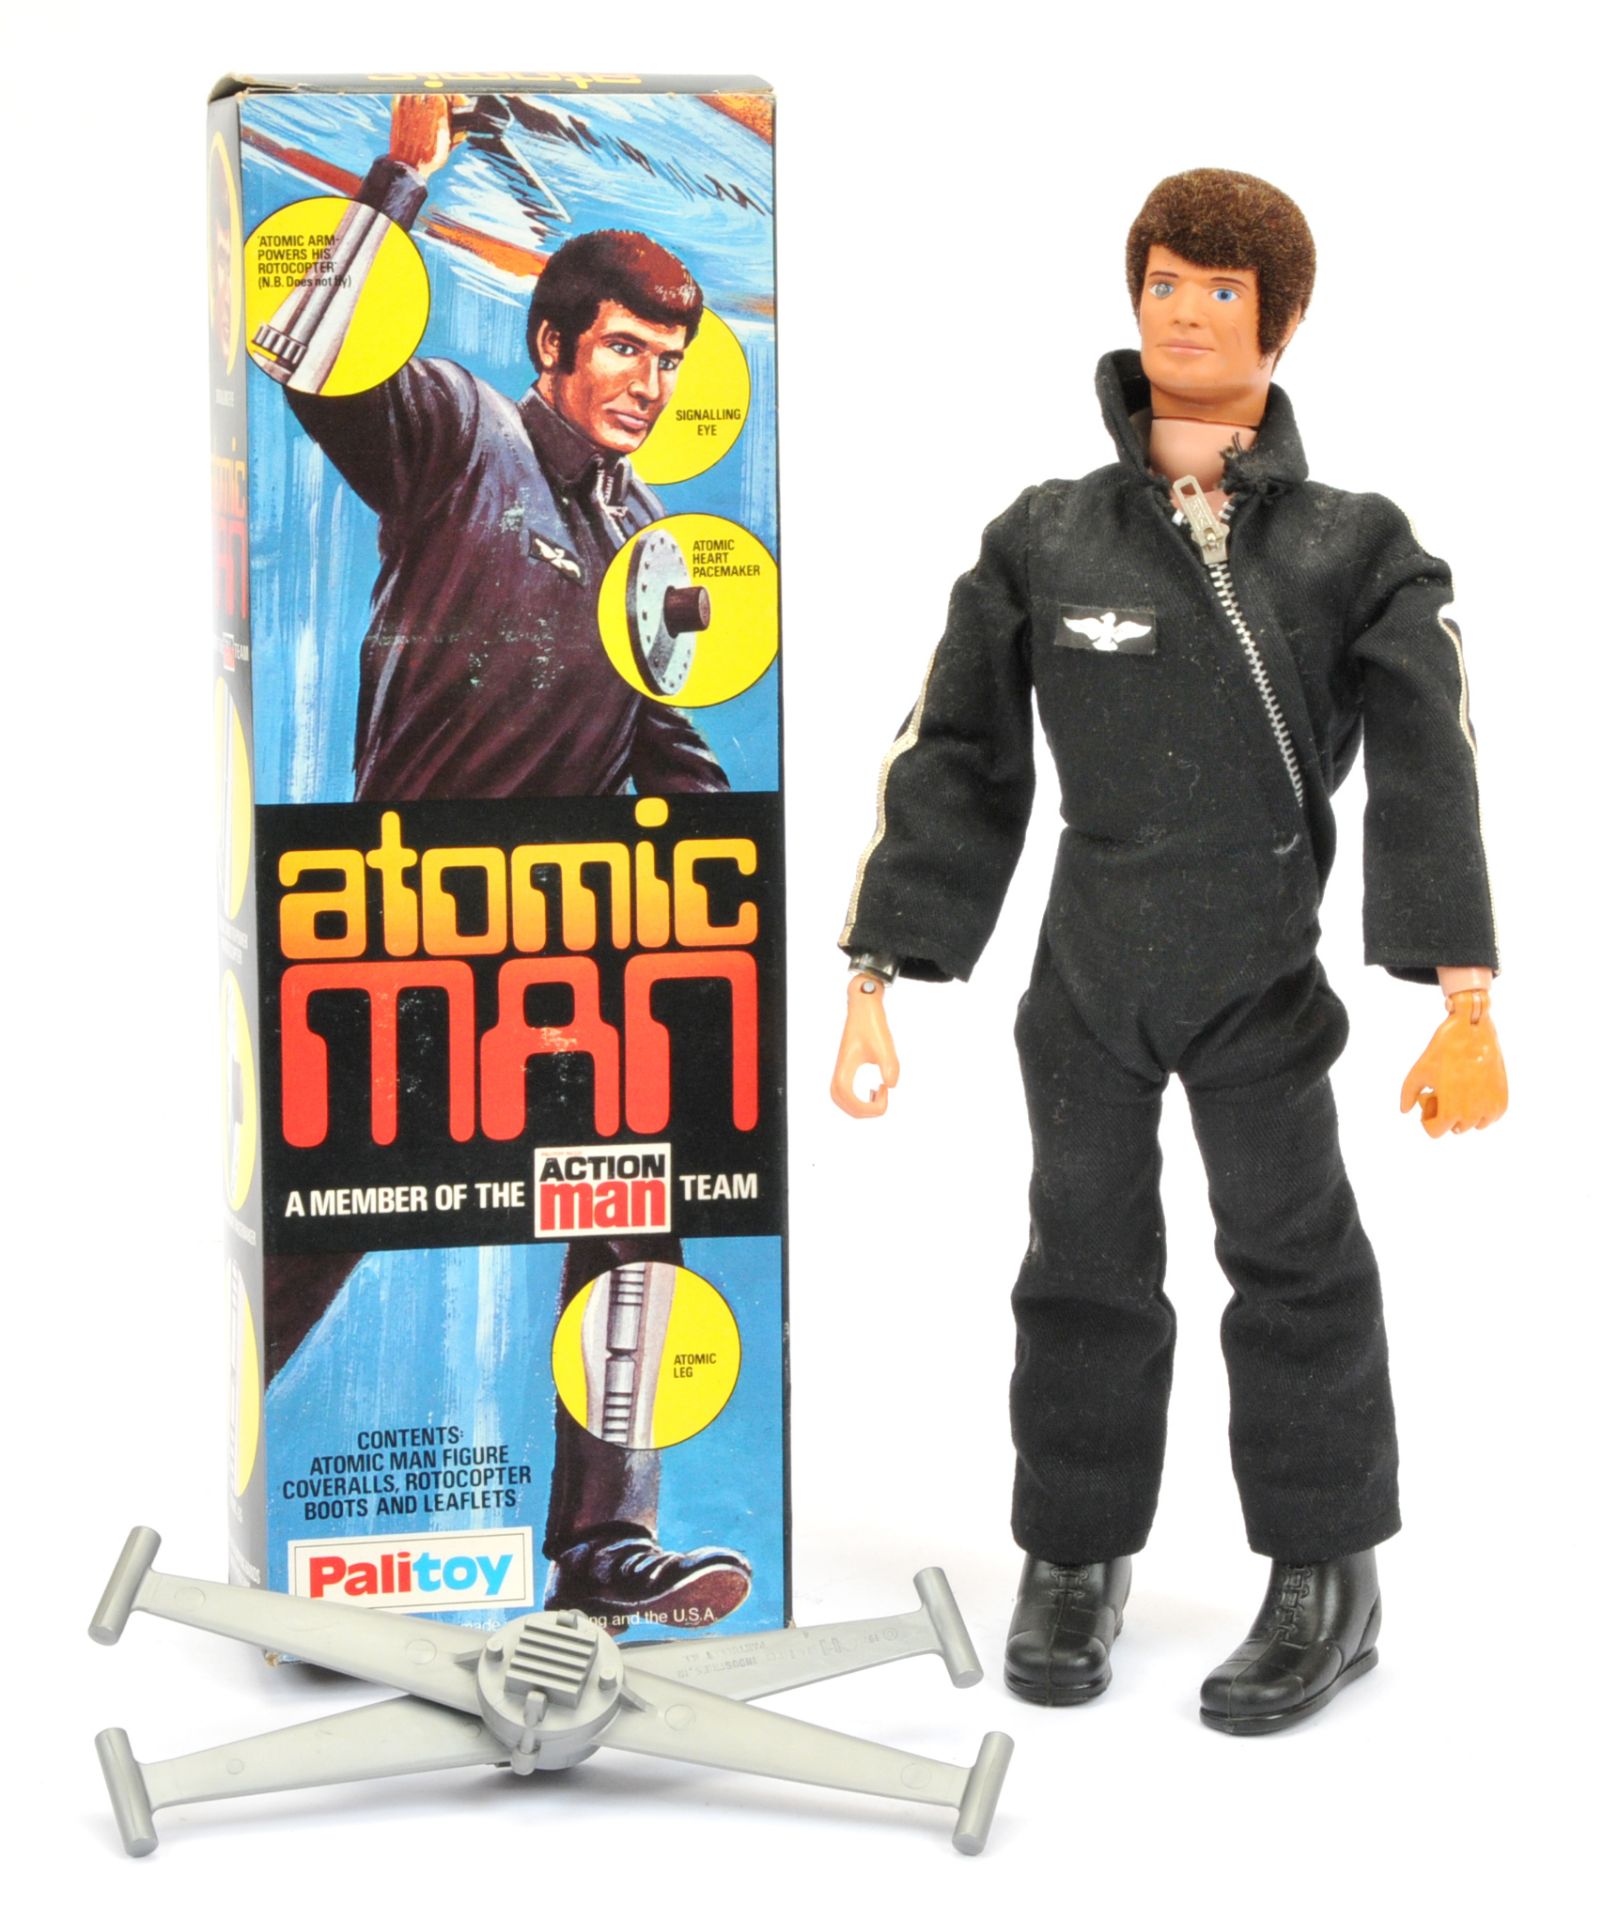 Palitoy Action Man vintage Atomic Man, Good, within a Fair Plus to Good box.